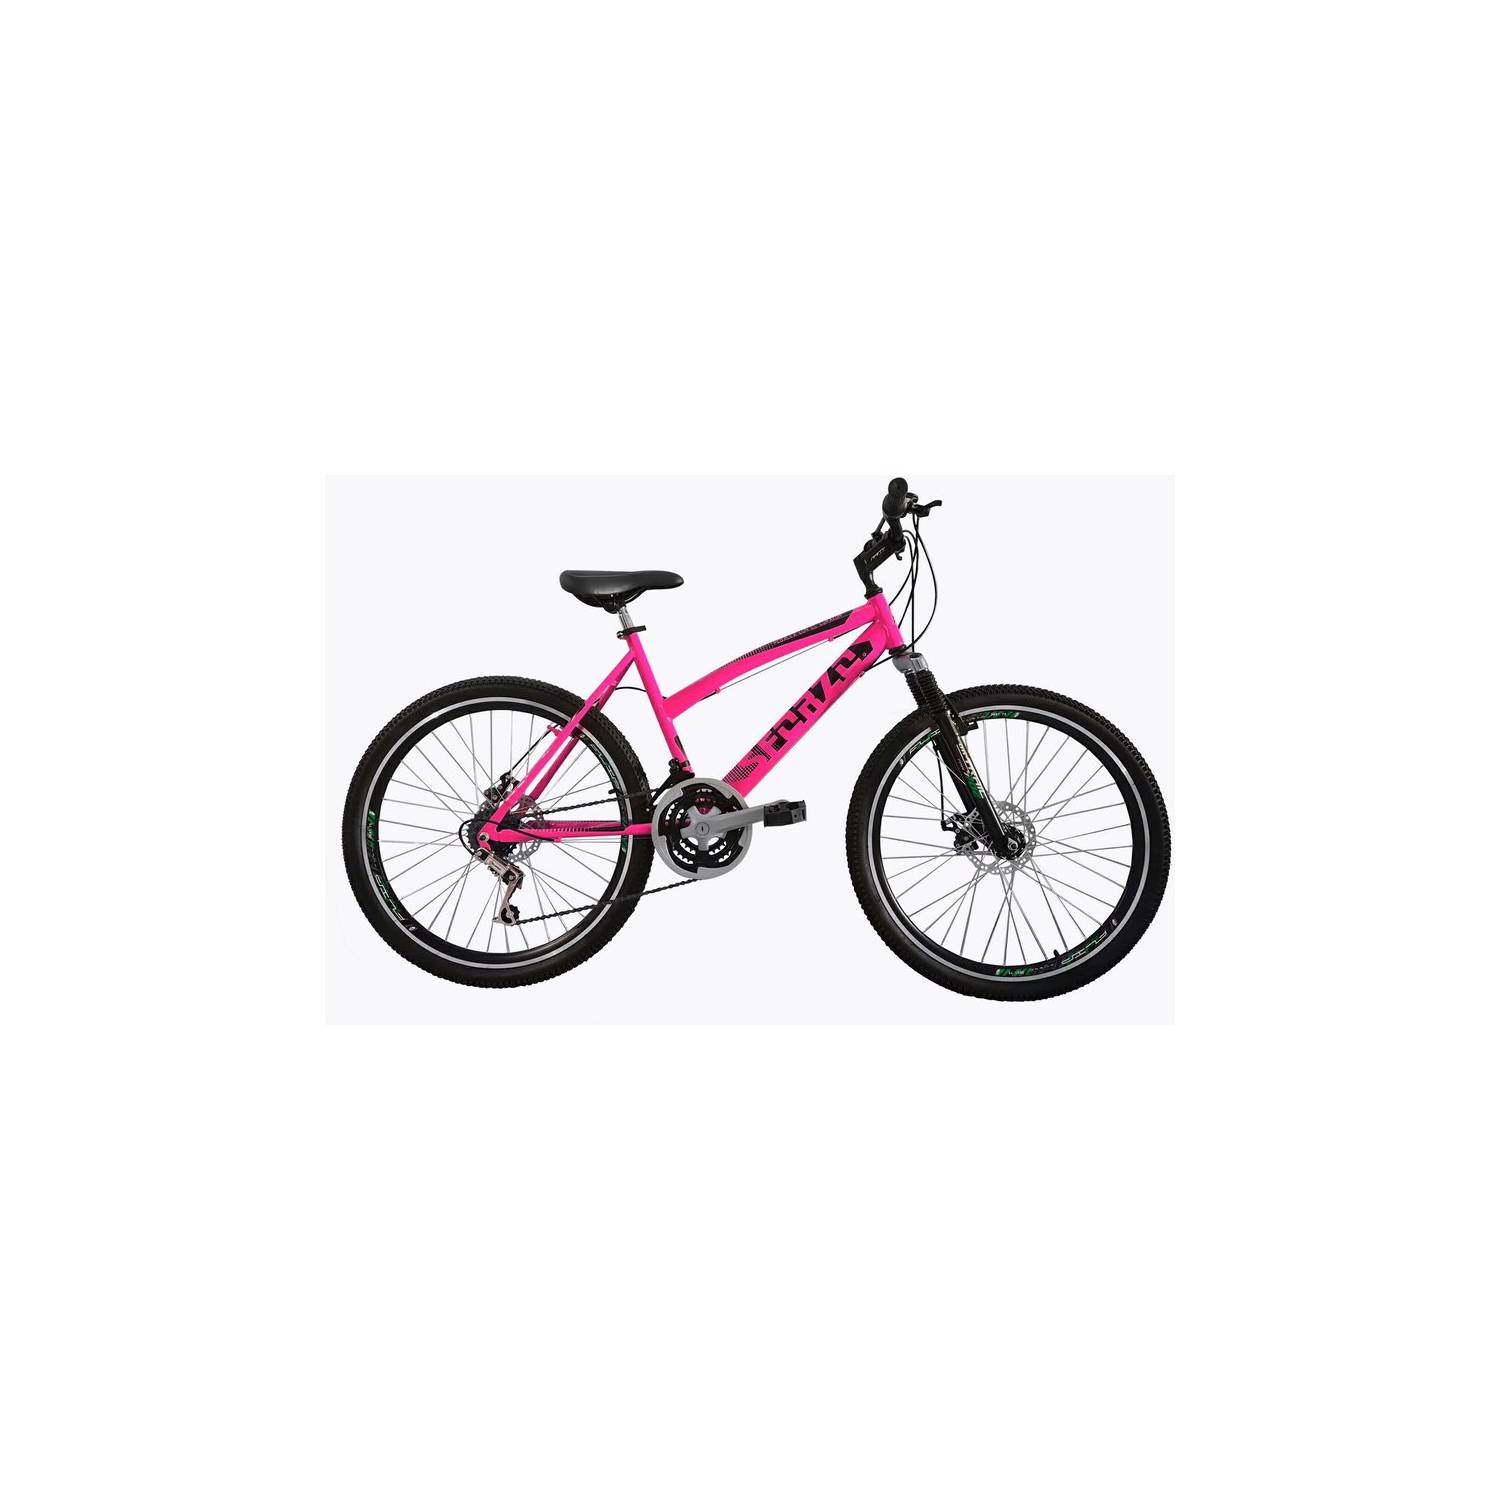 Bicicleta todoterreno para mujer Rin 26 18 cambios rosa ATILA